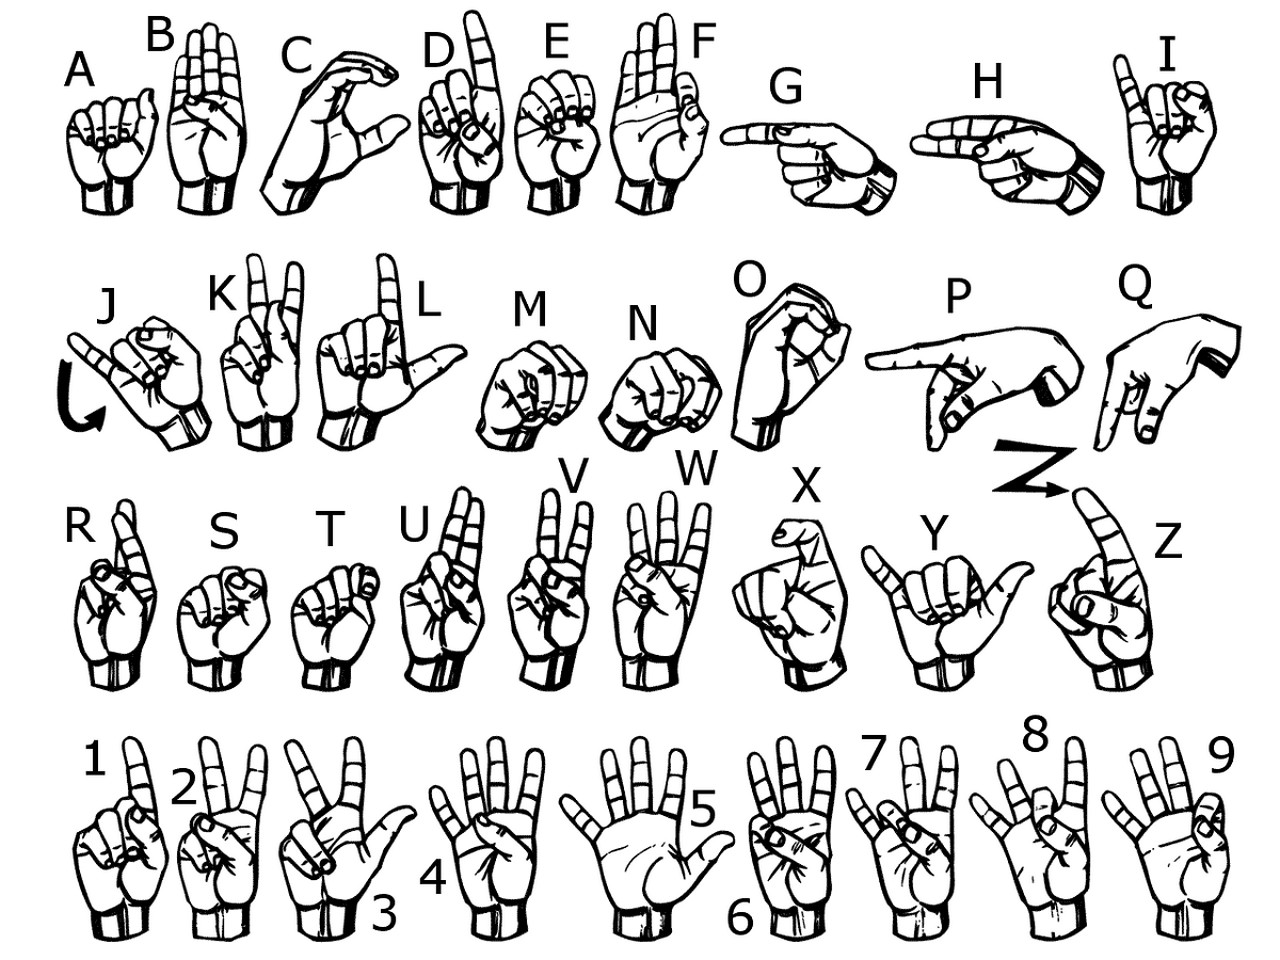 sign language chart page